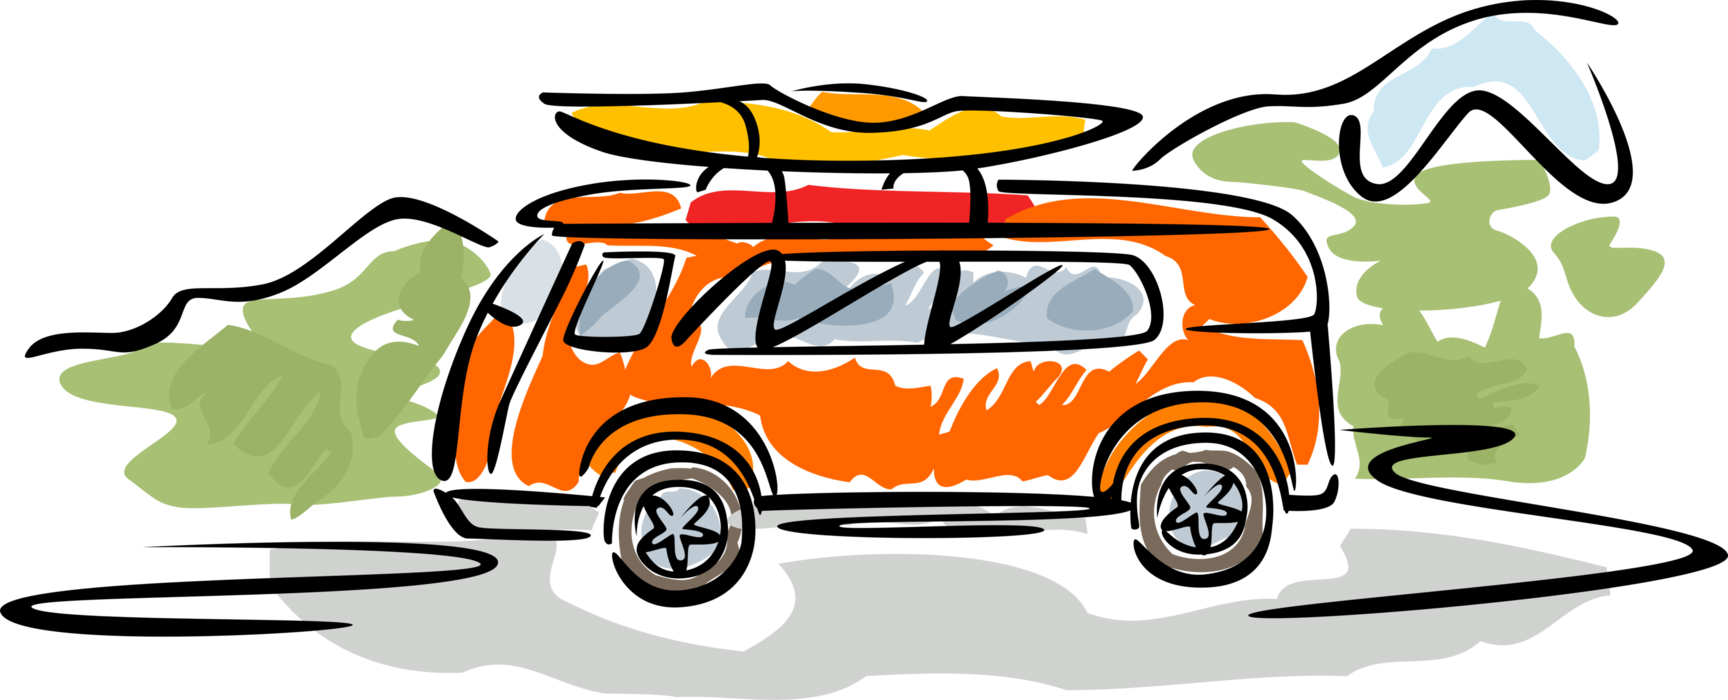 Vector Illustration of Motor Vehicle Van with Kayak Watercraft Boat on Roof Rack